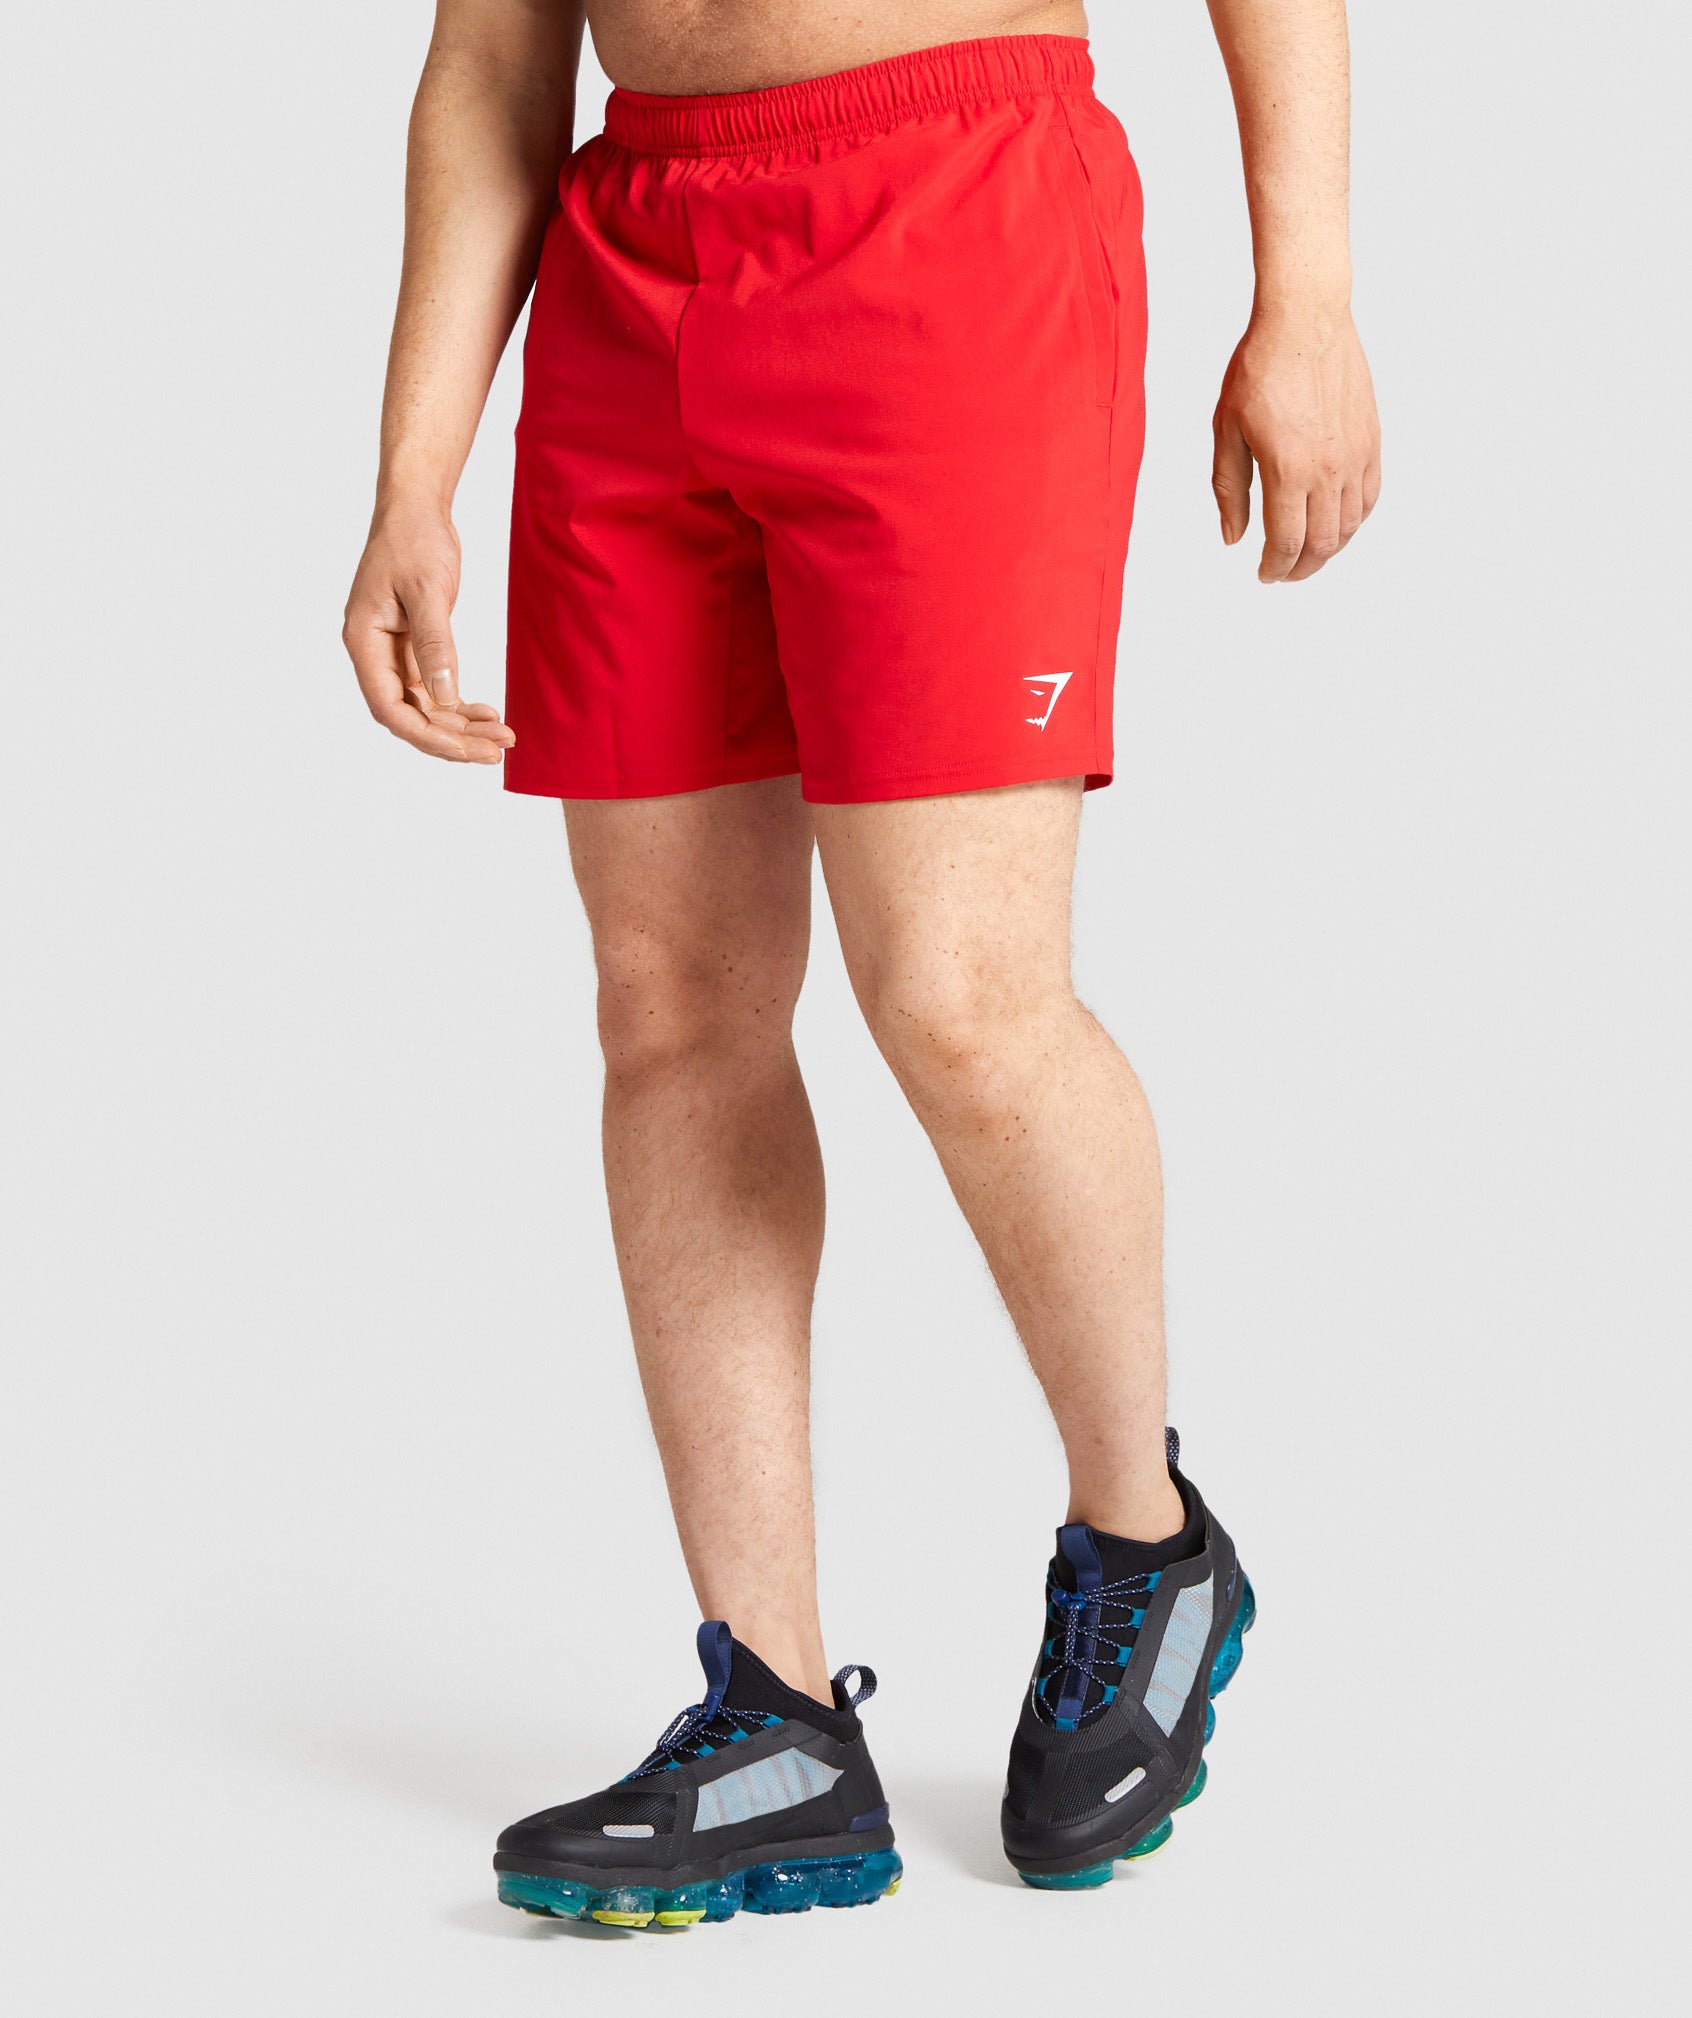 Gymshark Arrival Shorts - Red